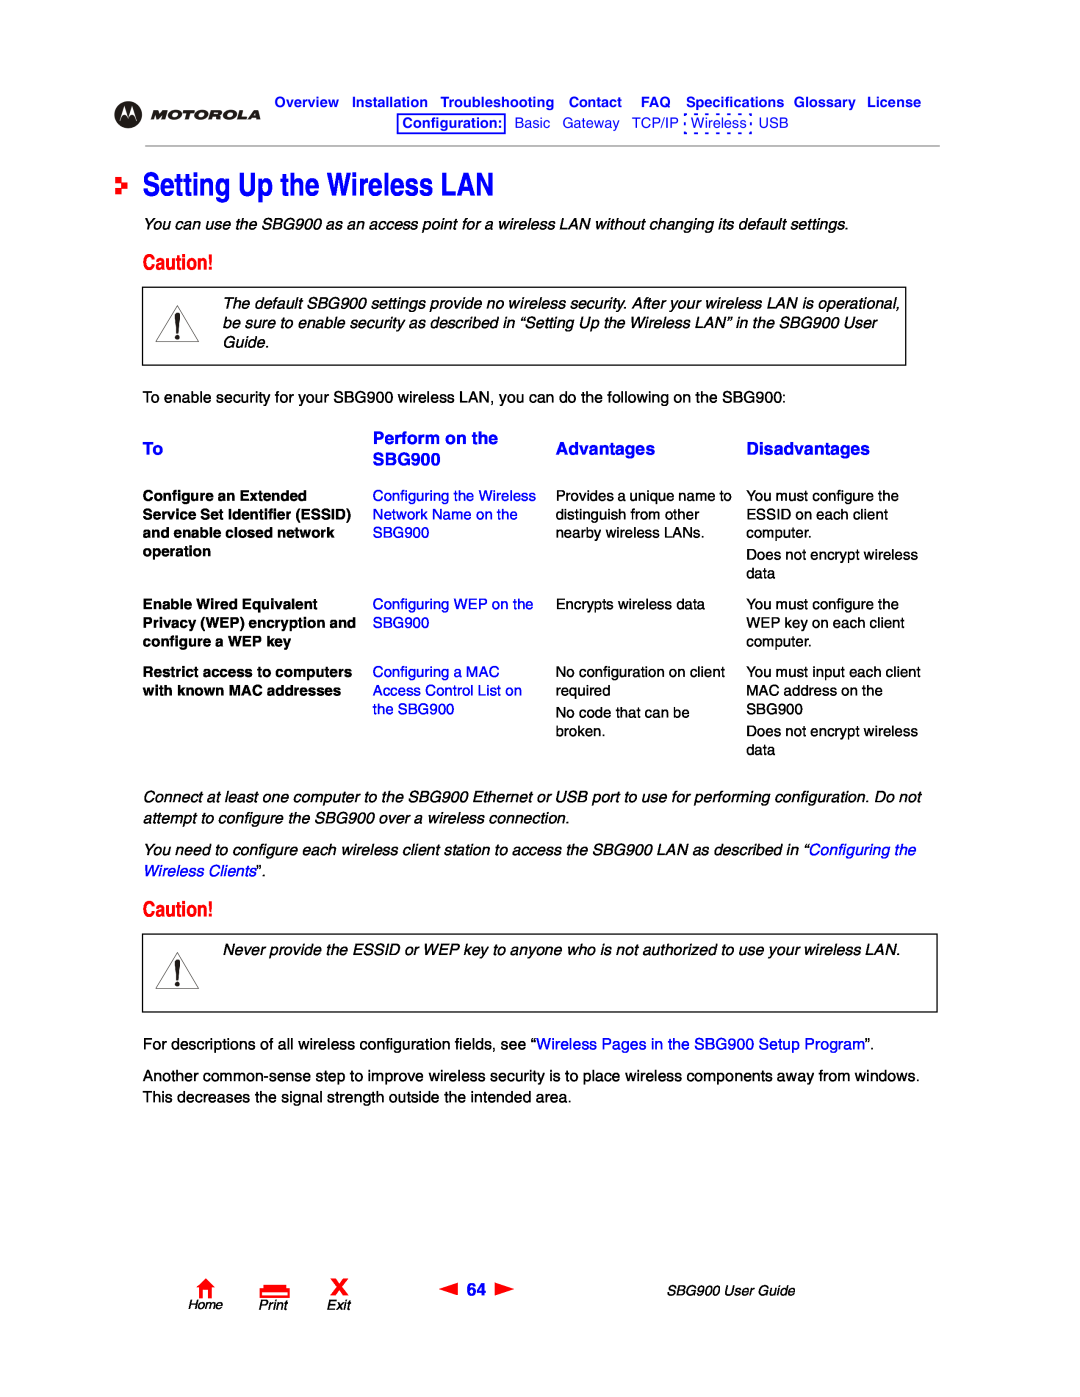 Motorola SBG900 manual Setting Up the Wireless LAN, Perform on the, Advantages, Disadvantages 